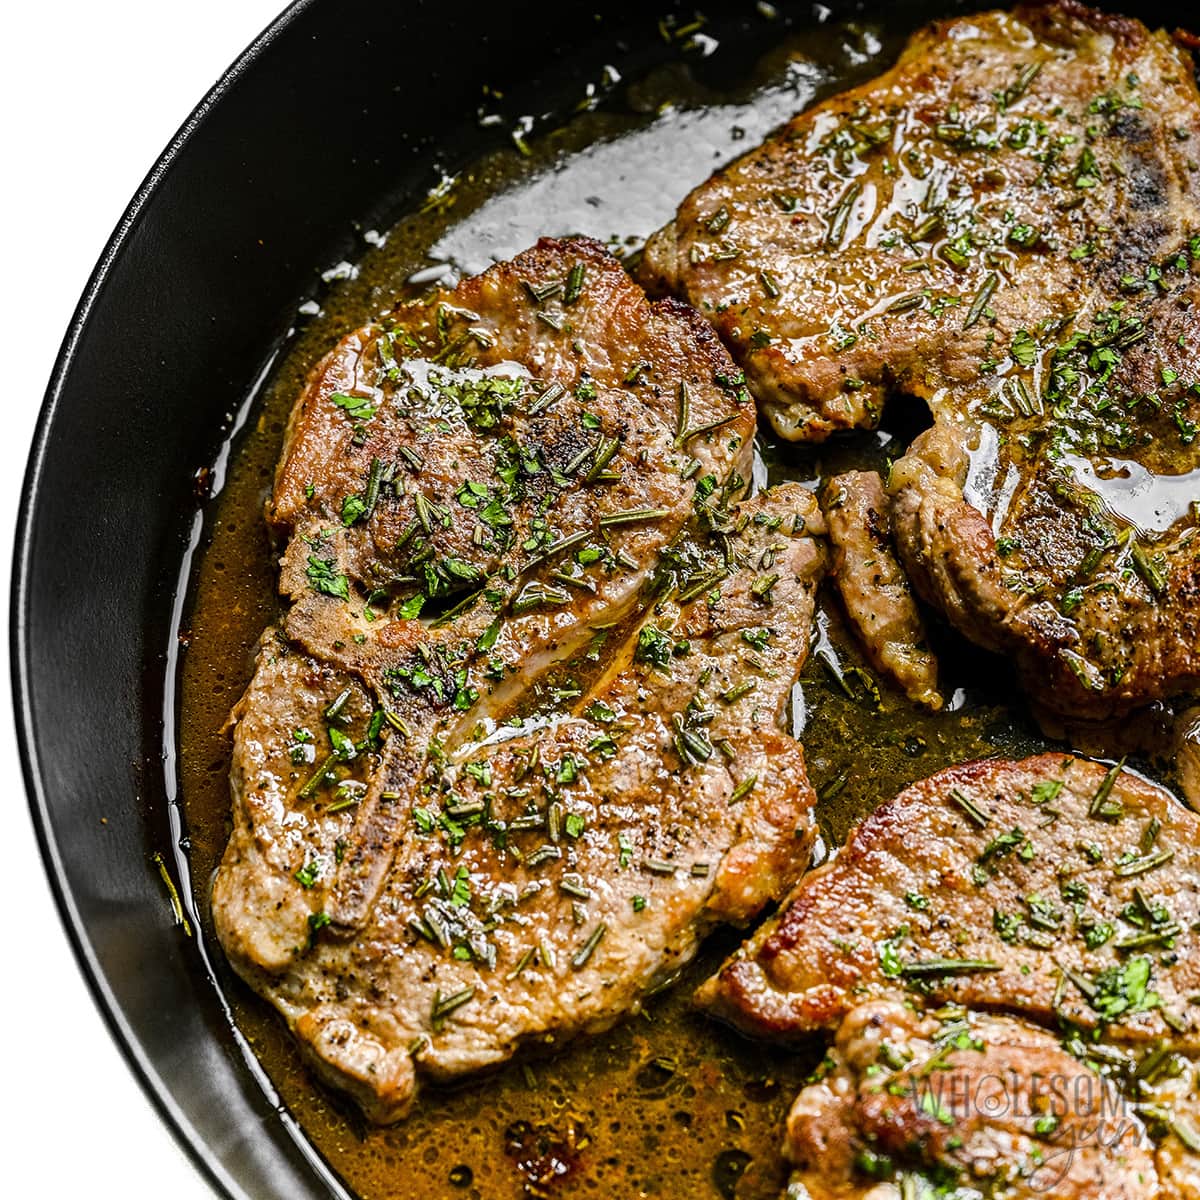 Pork steak recipe in cast iron skillet.